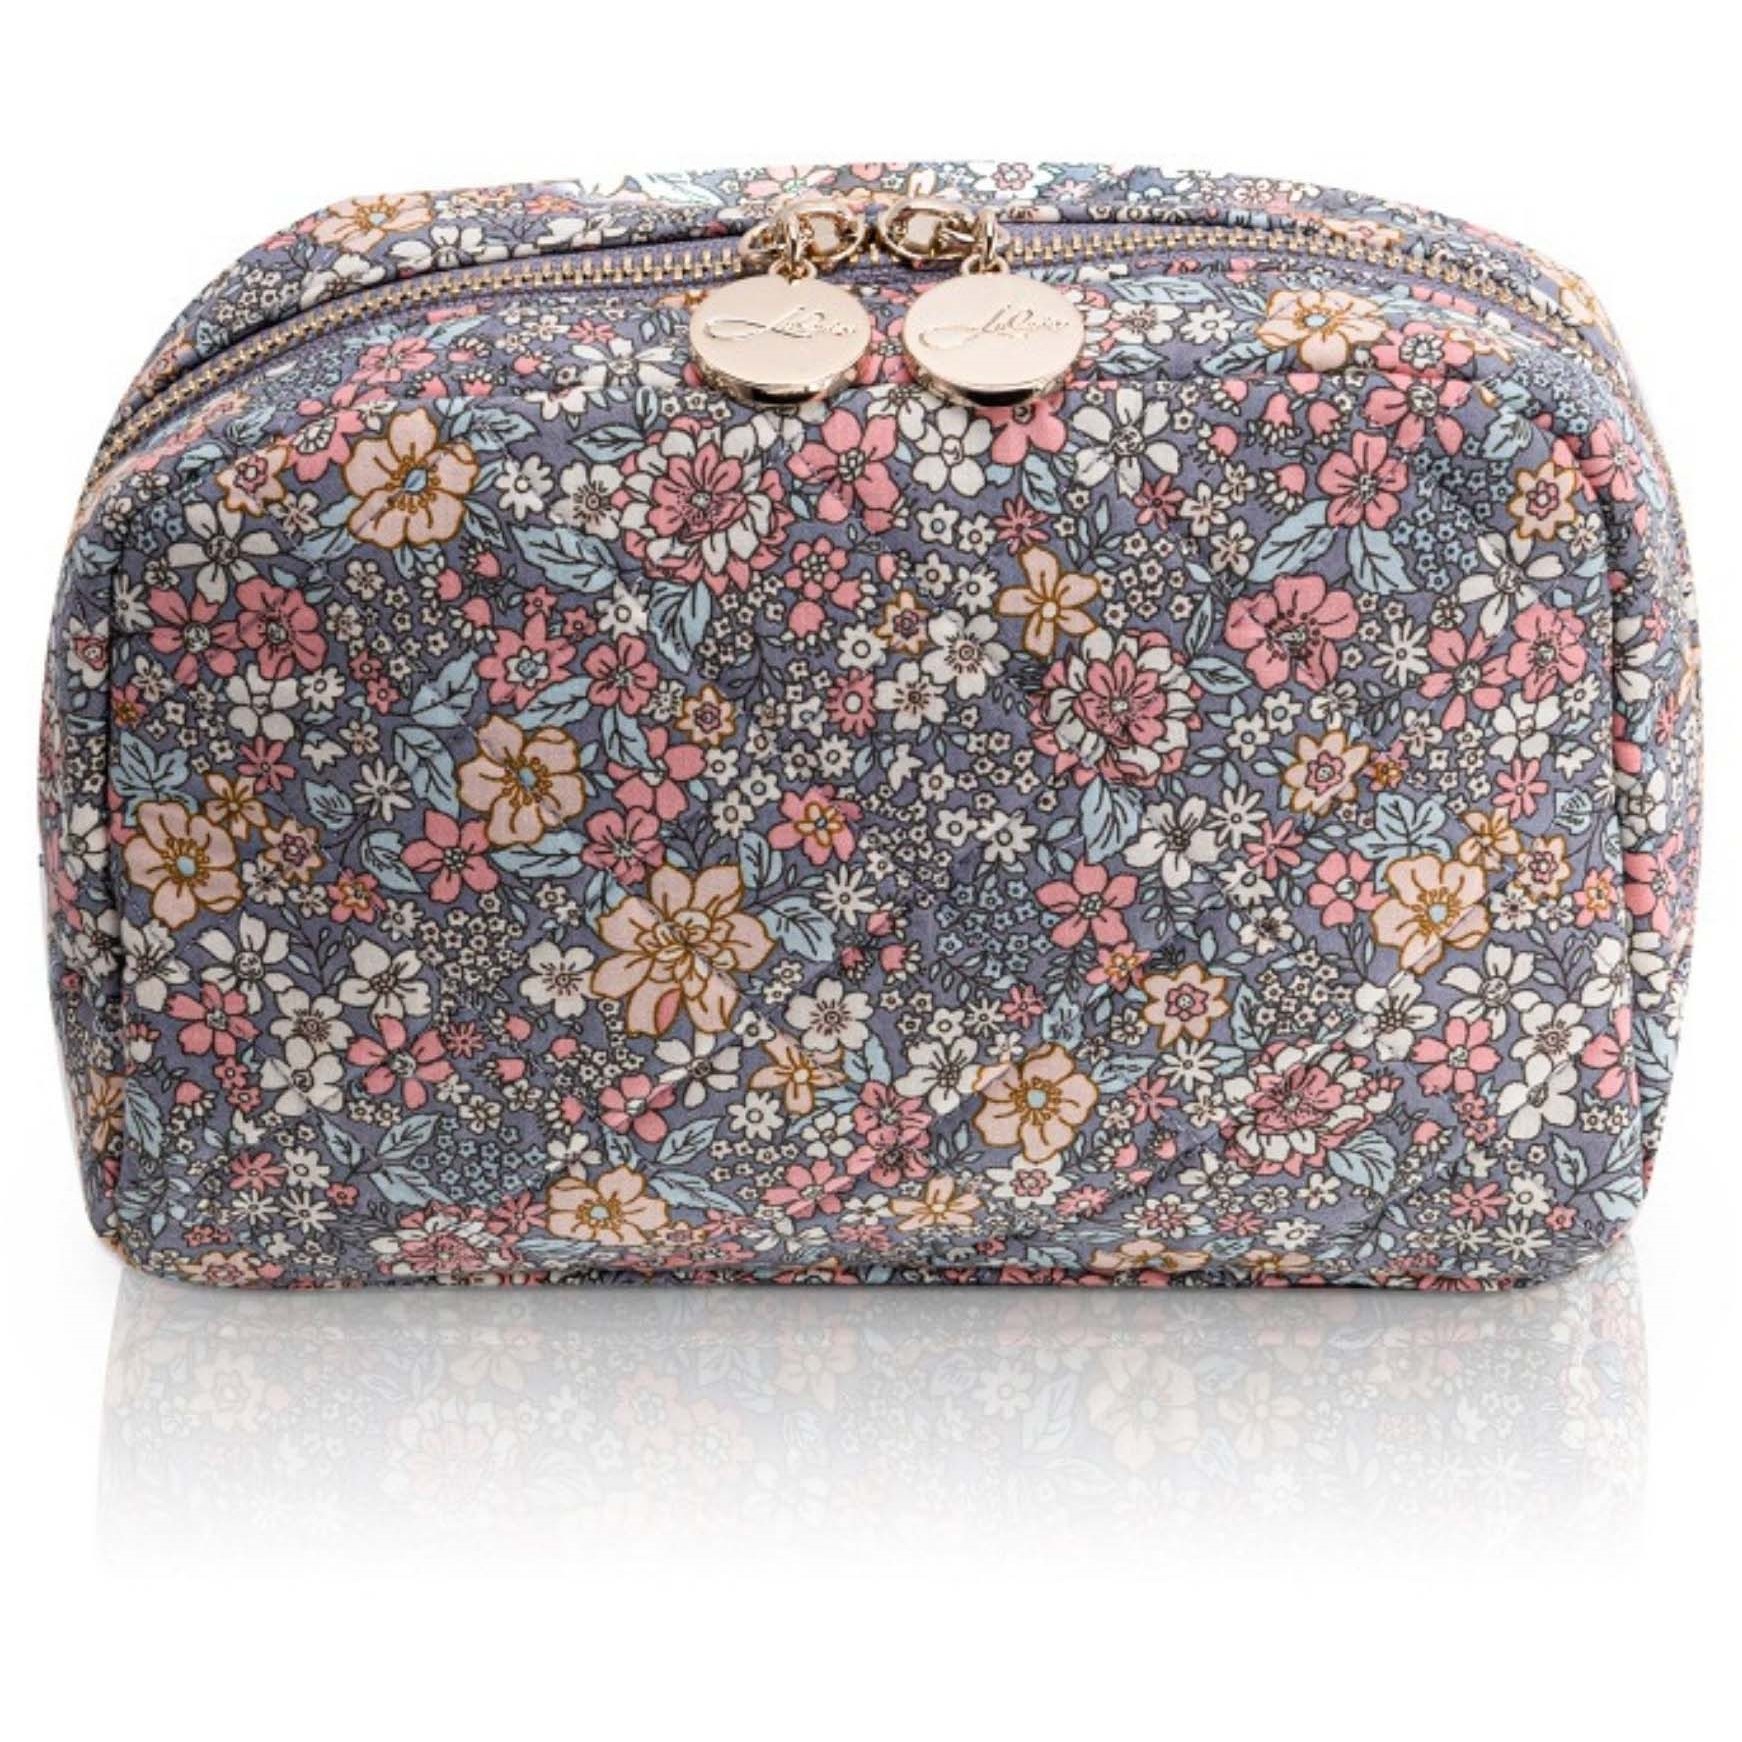 Bilde av Lulu's Accessories Cosmetic Bag Floral Mix